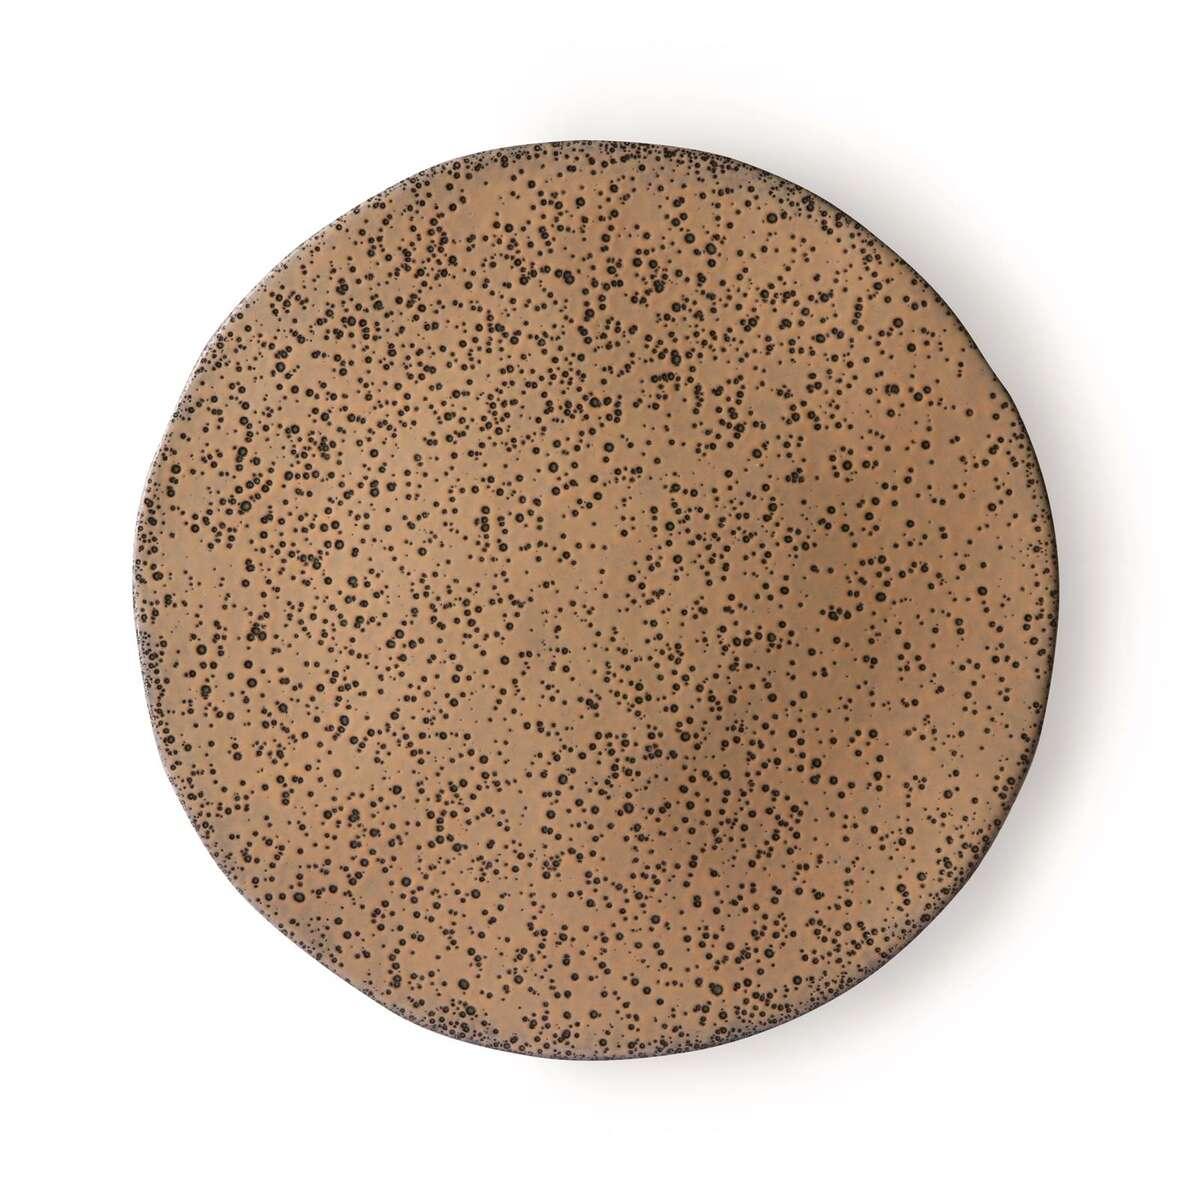 Ceramika gradientowa beżowy talerz obiadowy, HKliving, Eye on Design